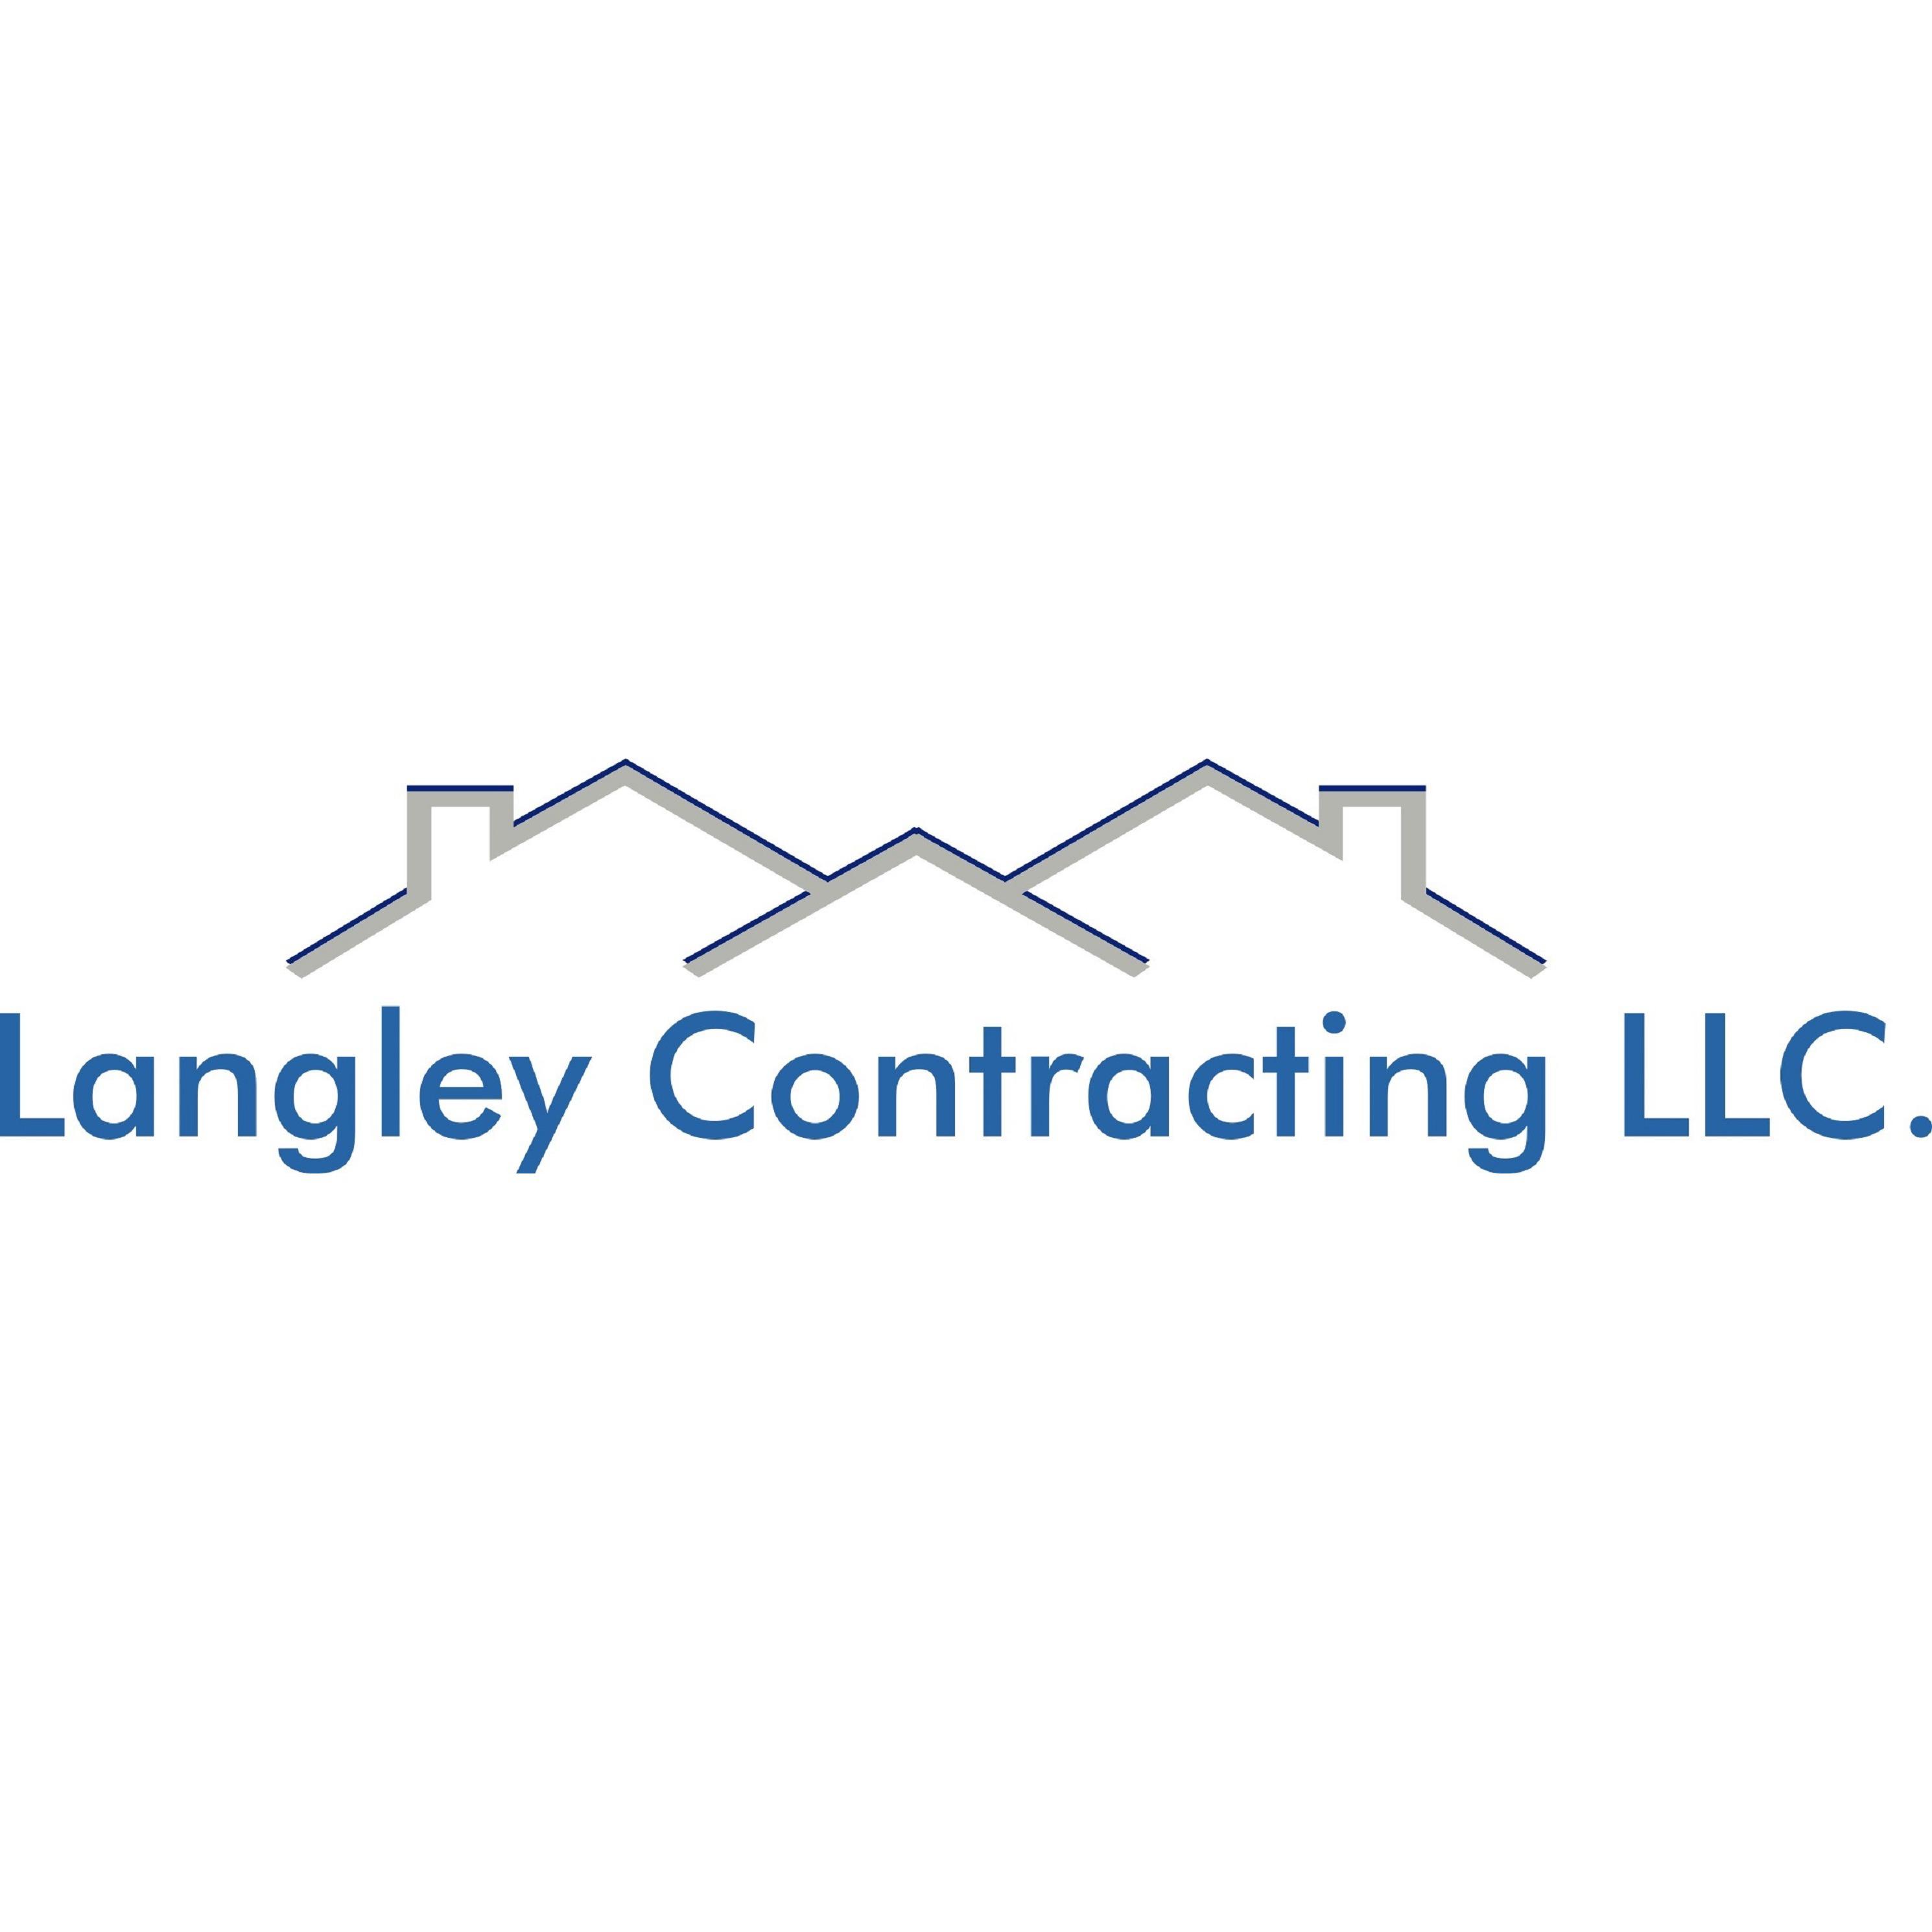 Langley Contracting LLC